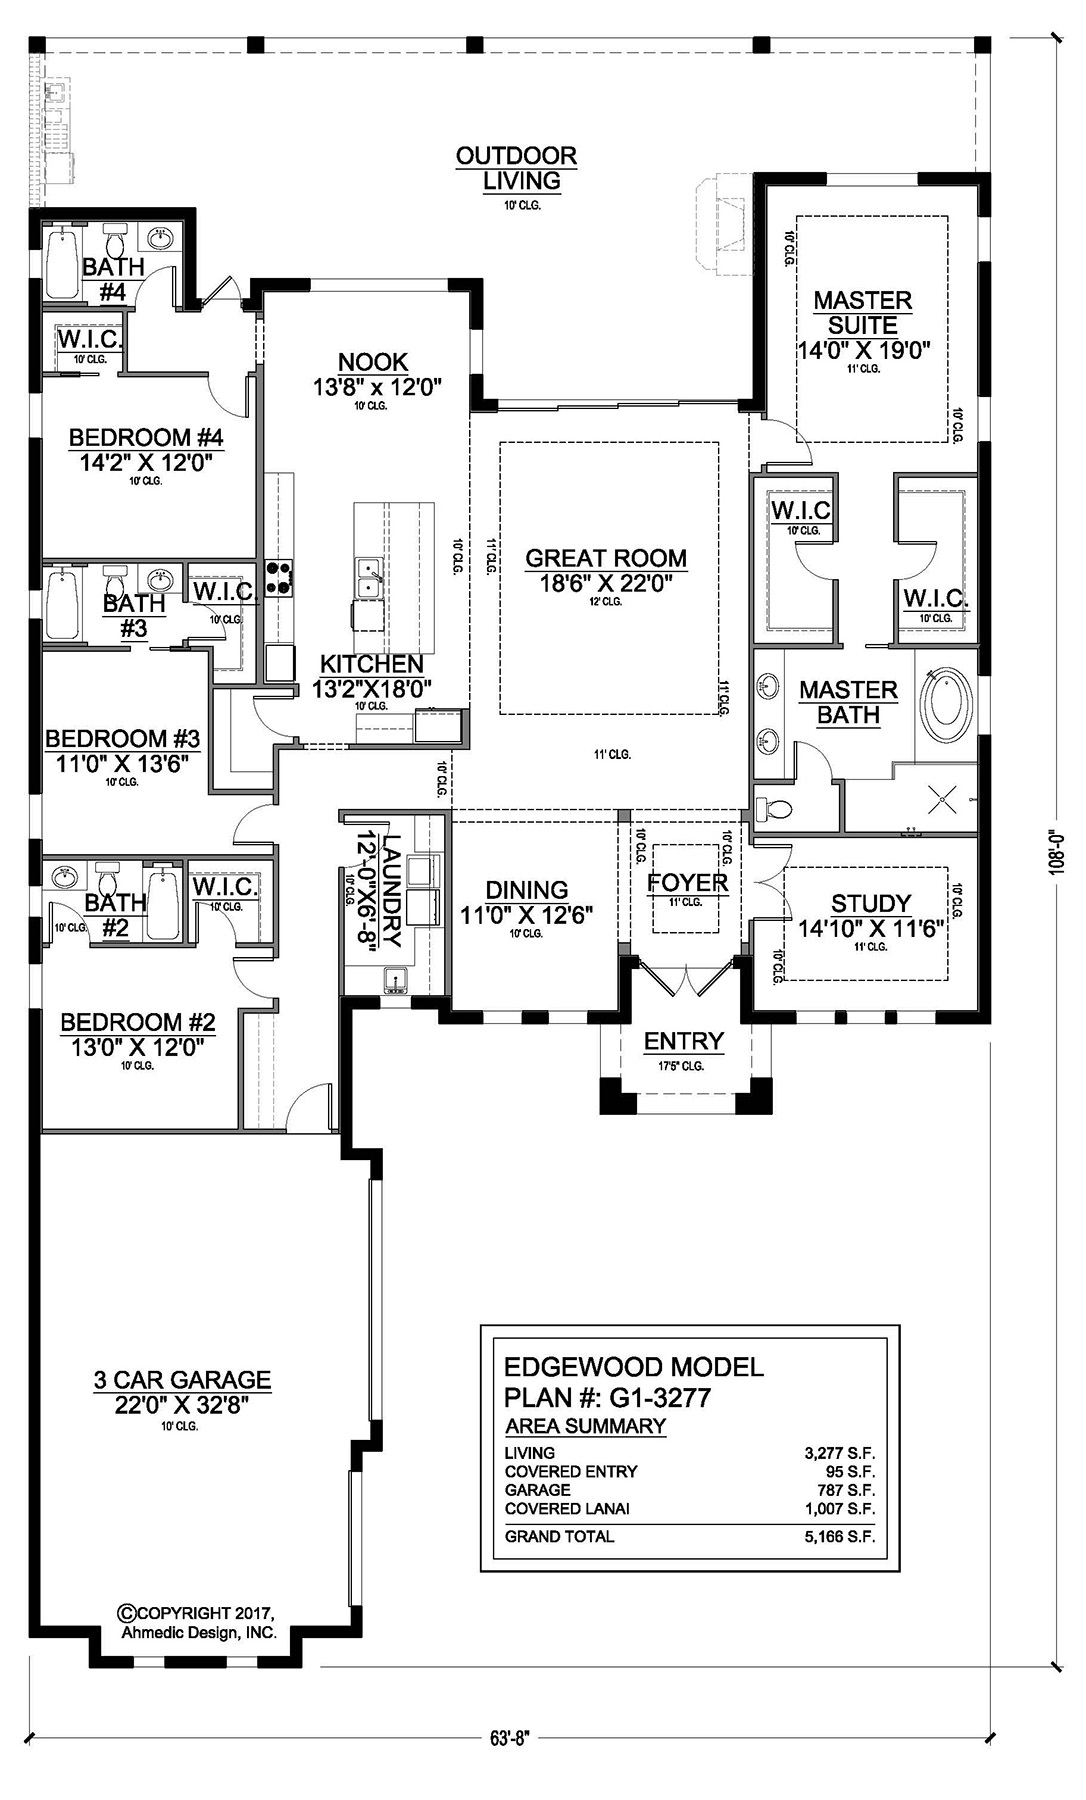 Edgewood Floor Plan